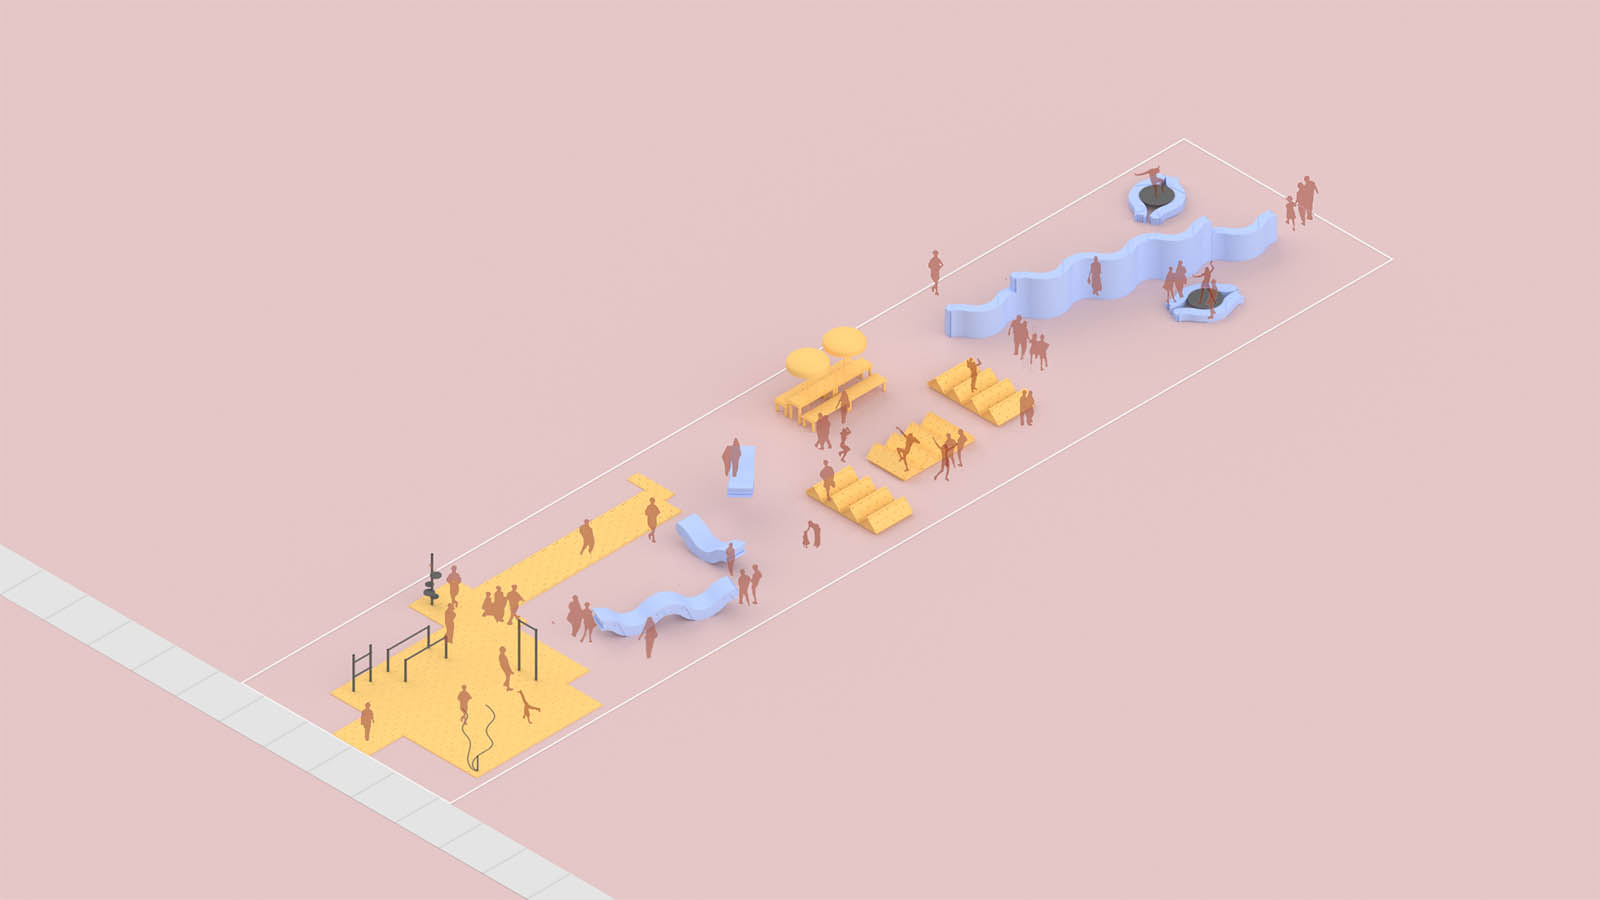 visualization of a playground